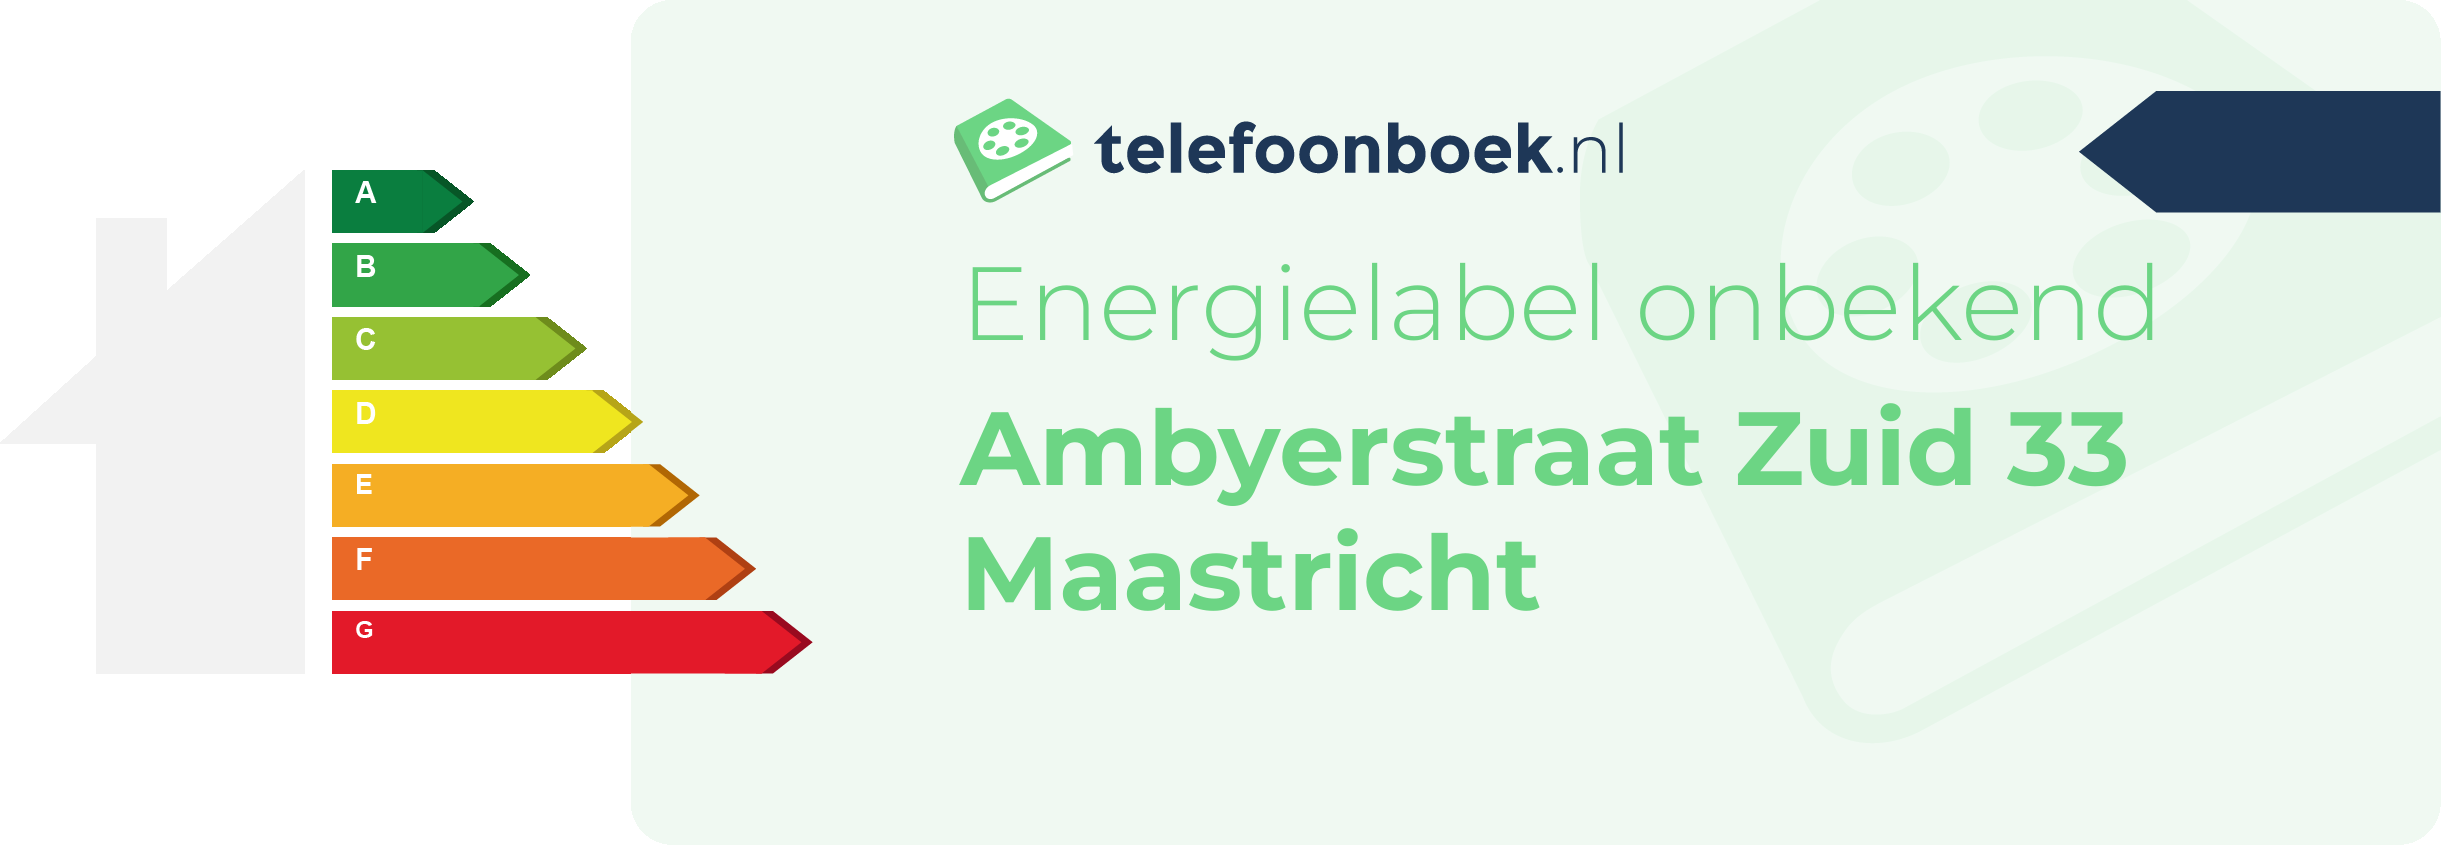 Energielabel Ambyerstraat Zuid 33 Maastricht